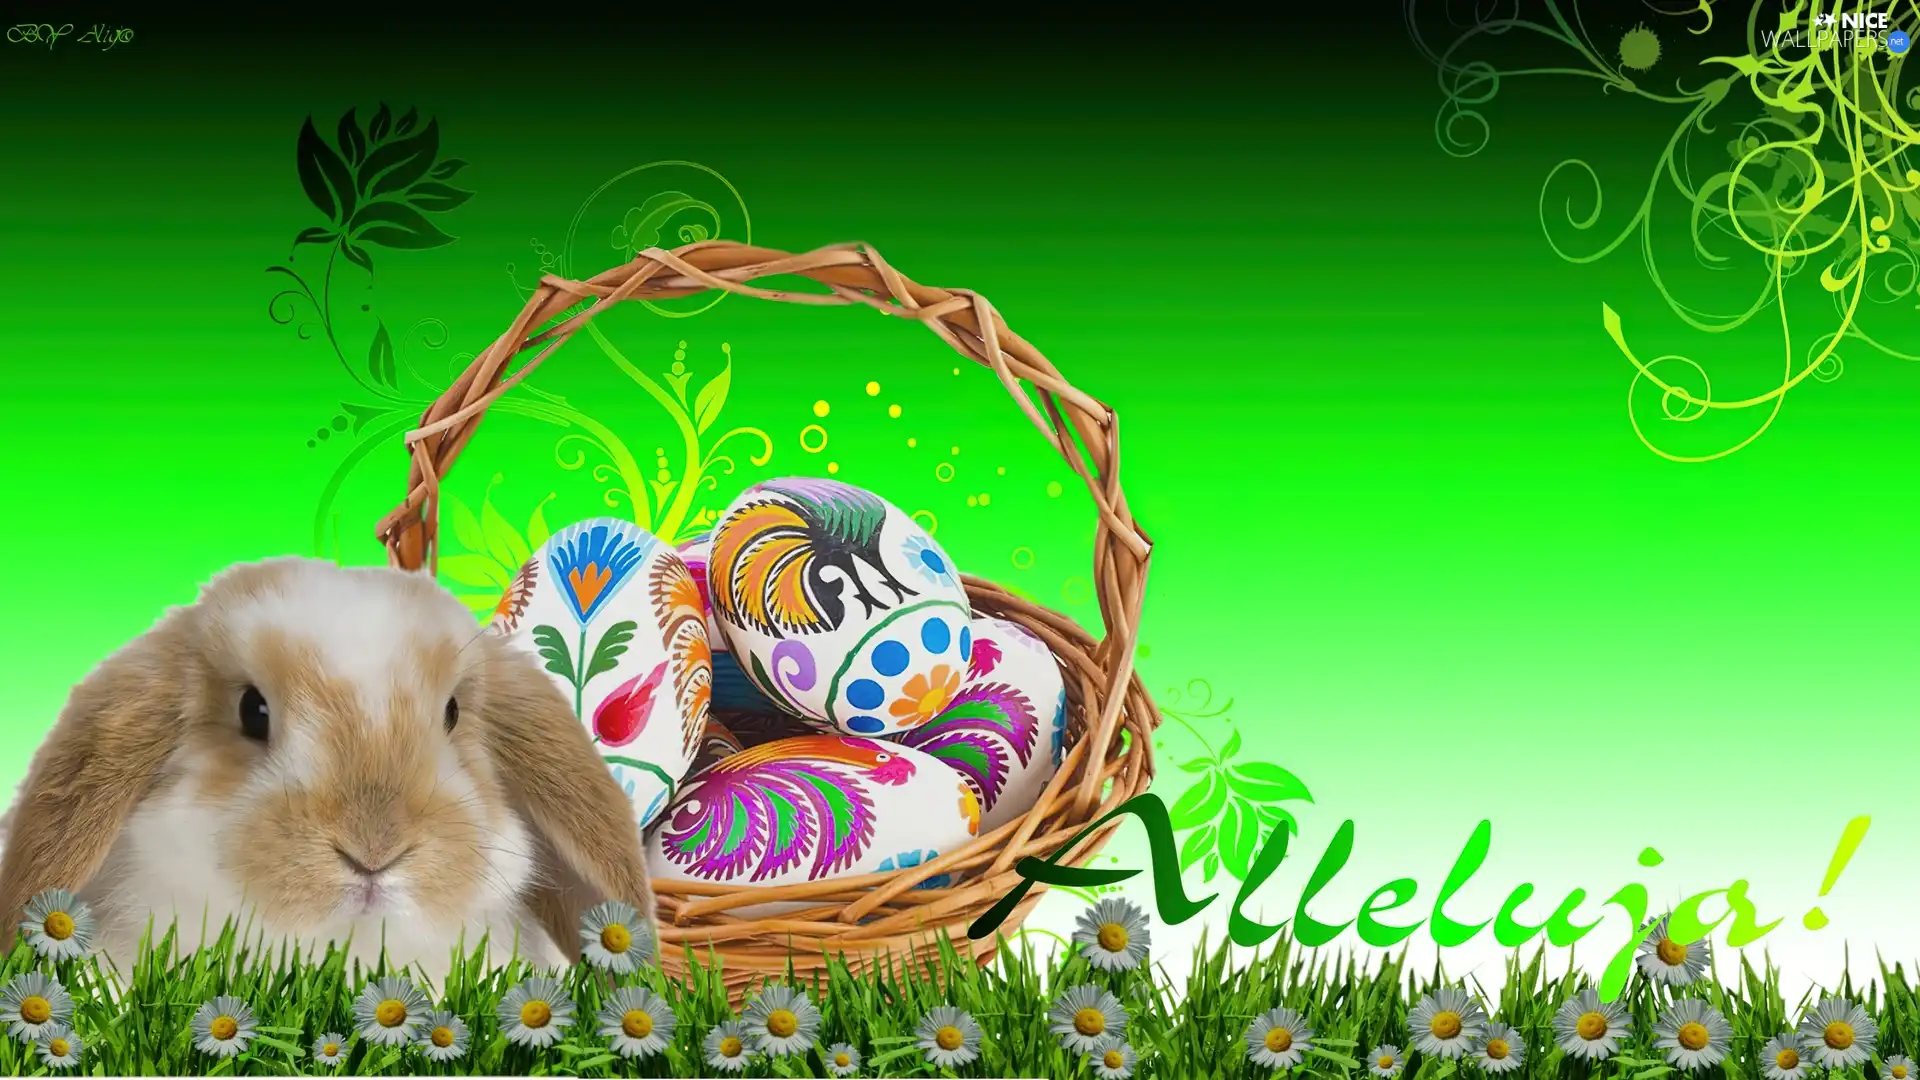 basket, Rabbit, eggs